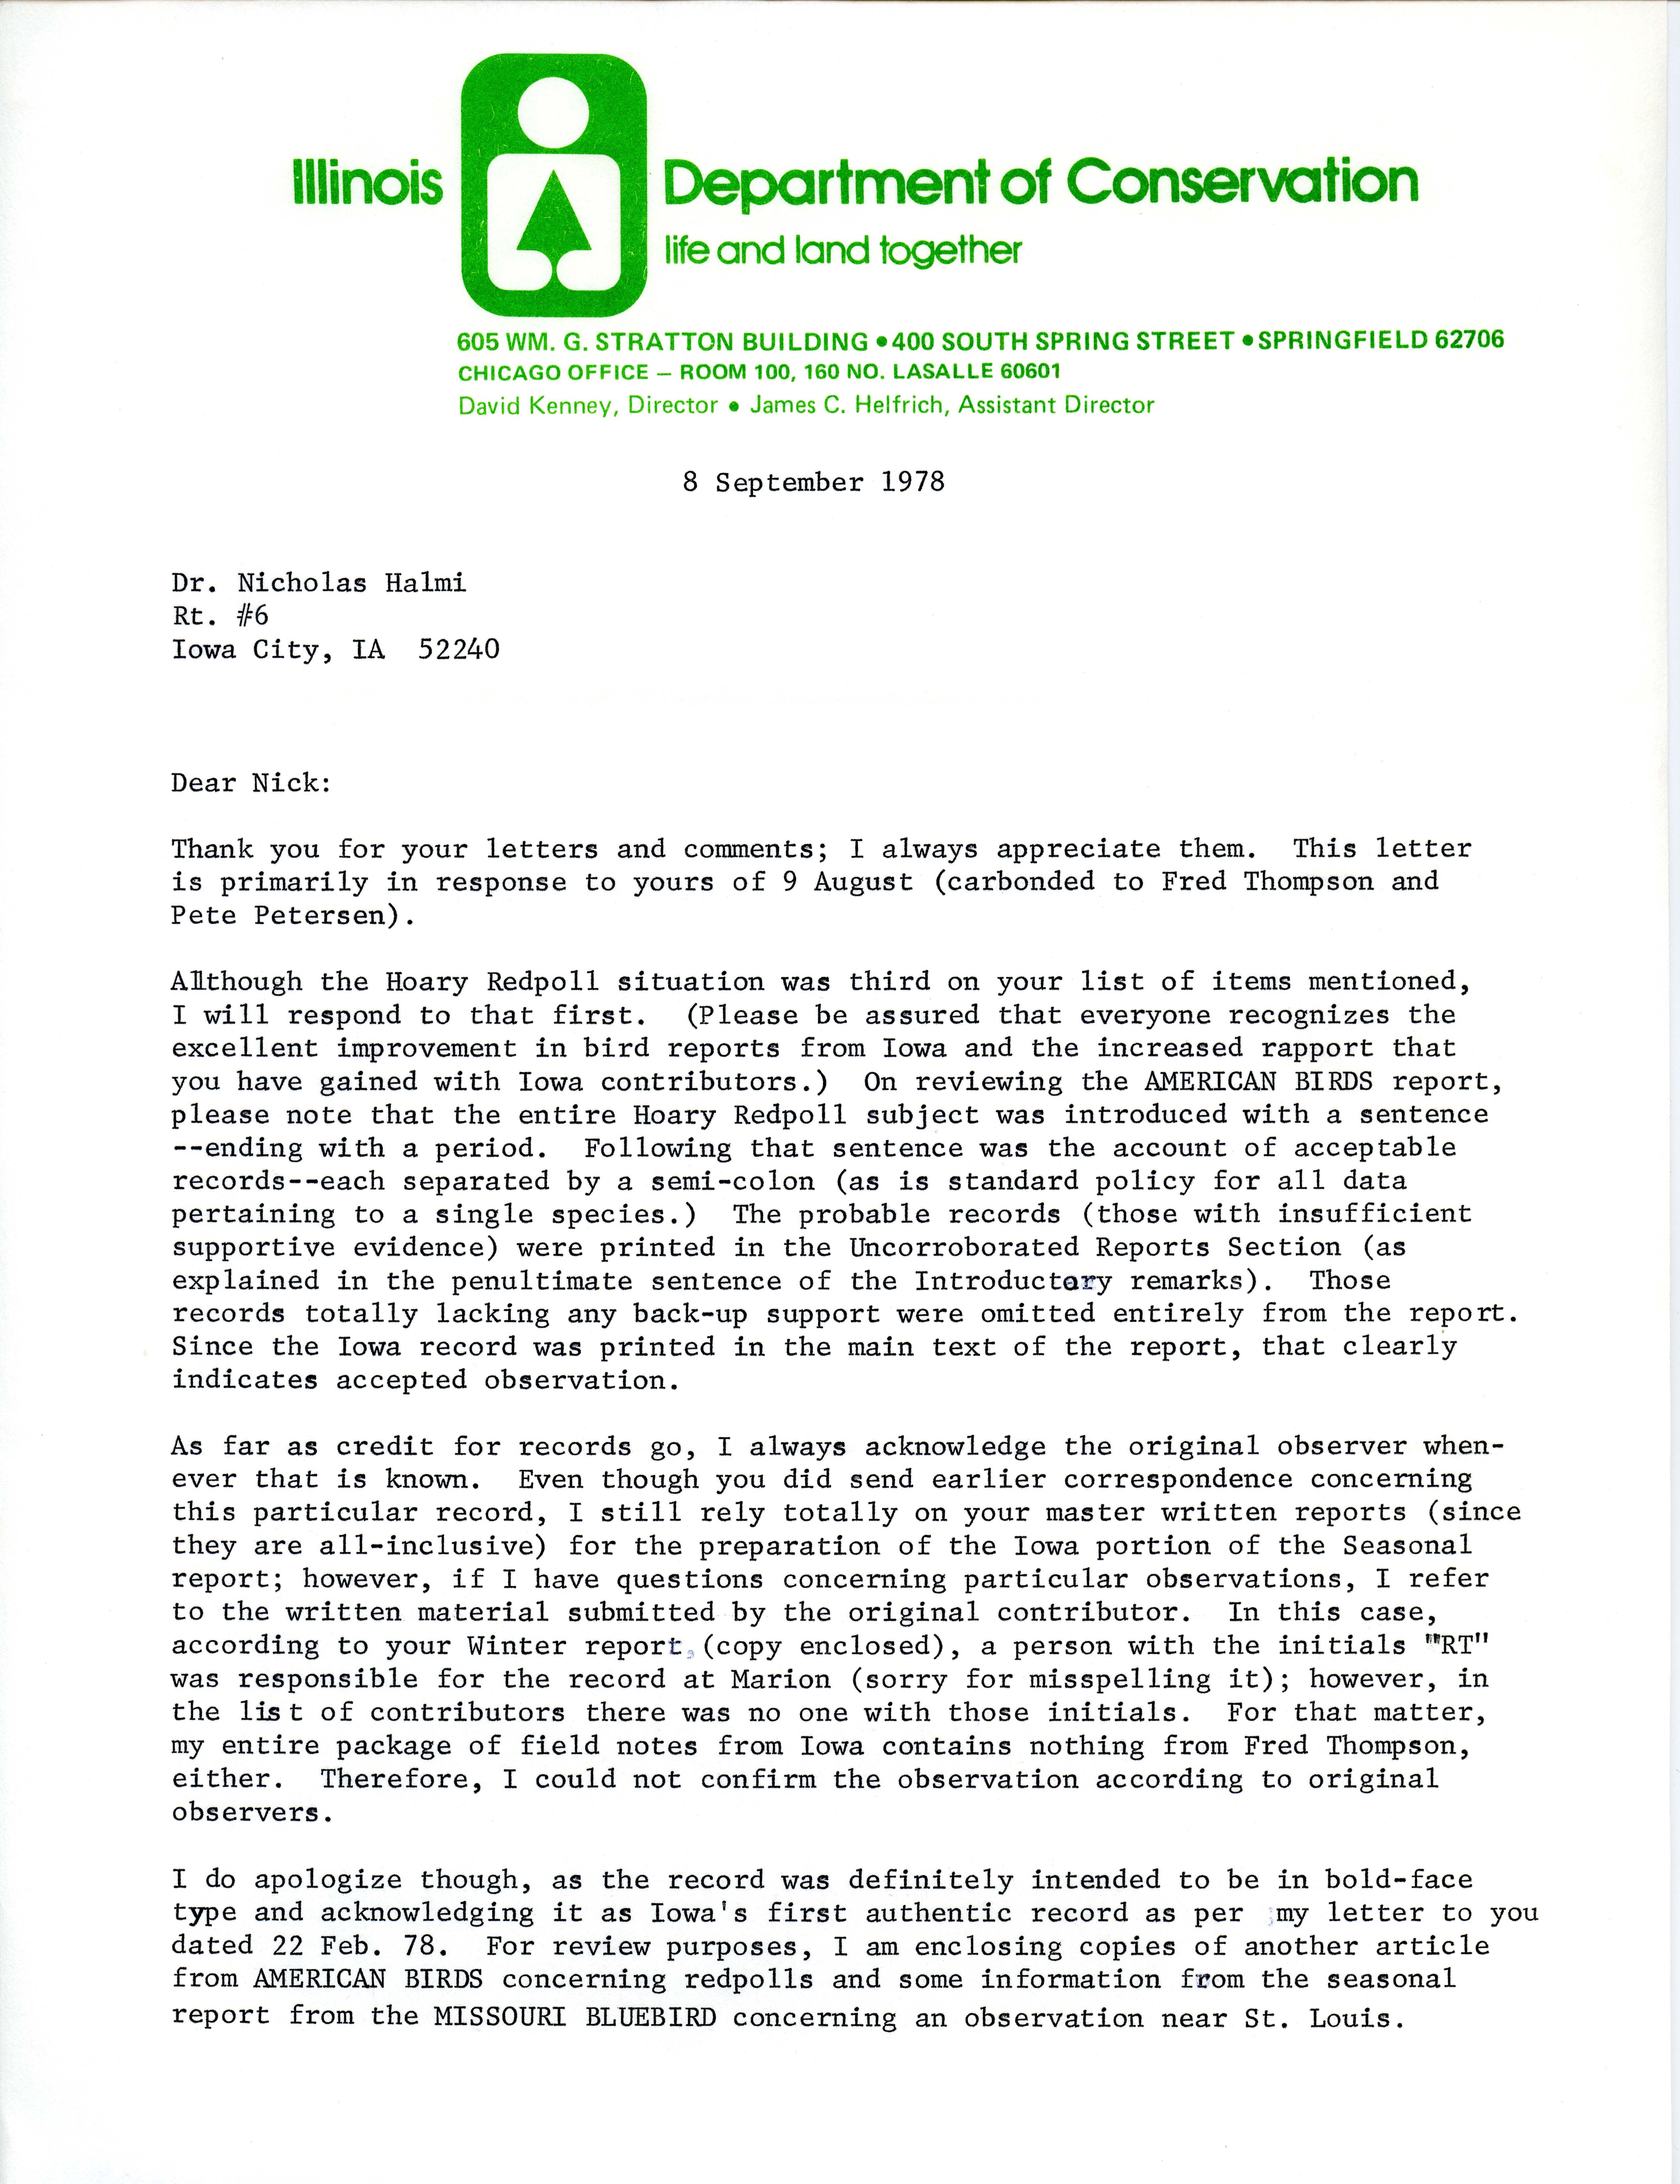 Vernon M. Kleen letter to Nicholas S. Halmi regarding publication of bird reports, September 8, 1978